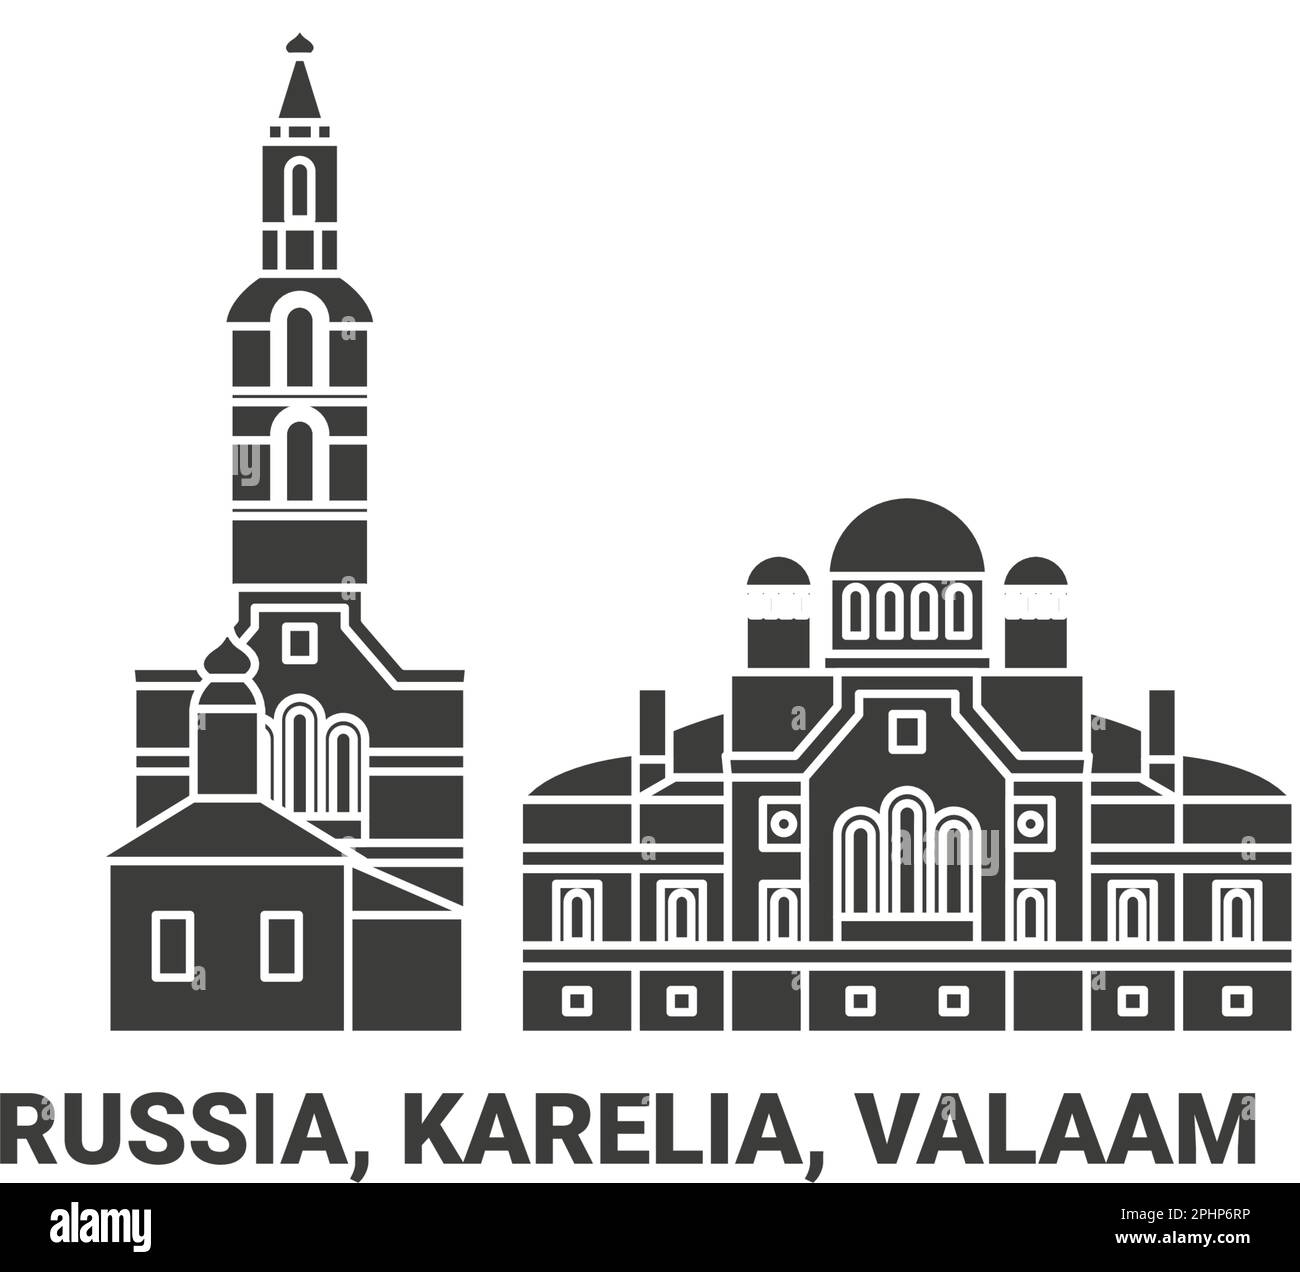 Russia, Karelia, Valaam, travel landmark vector illustration Stock Vector